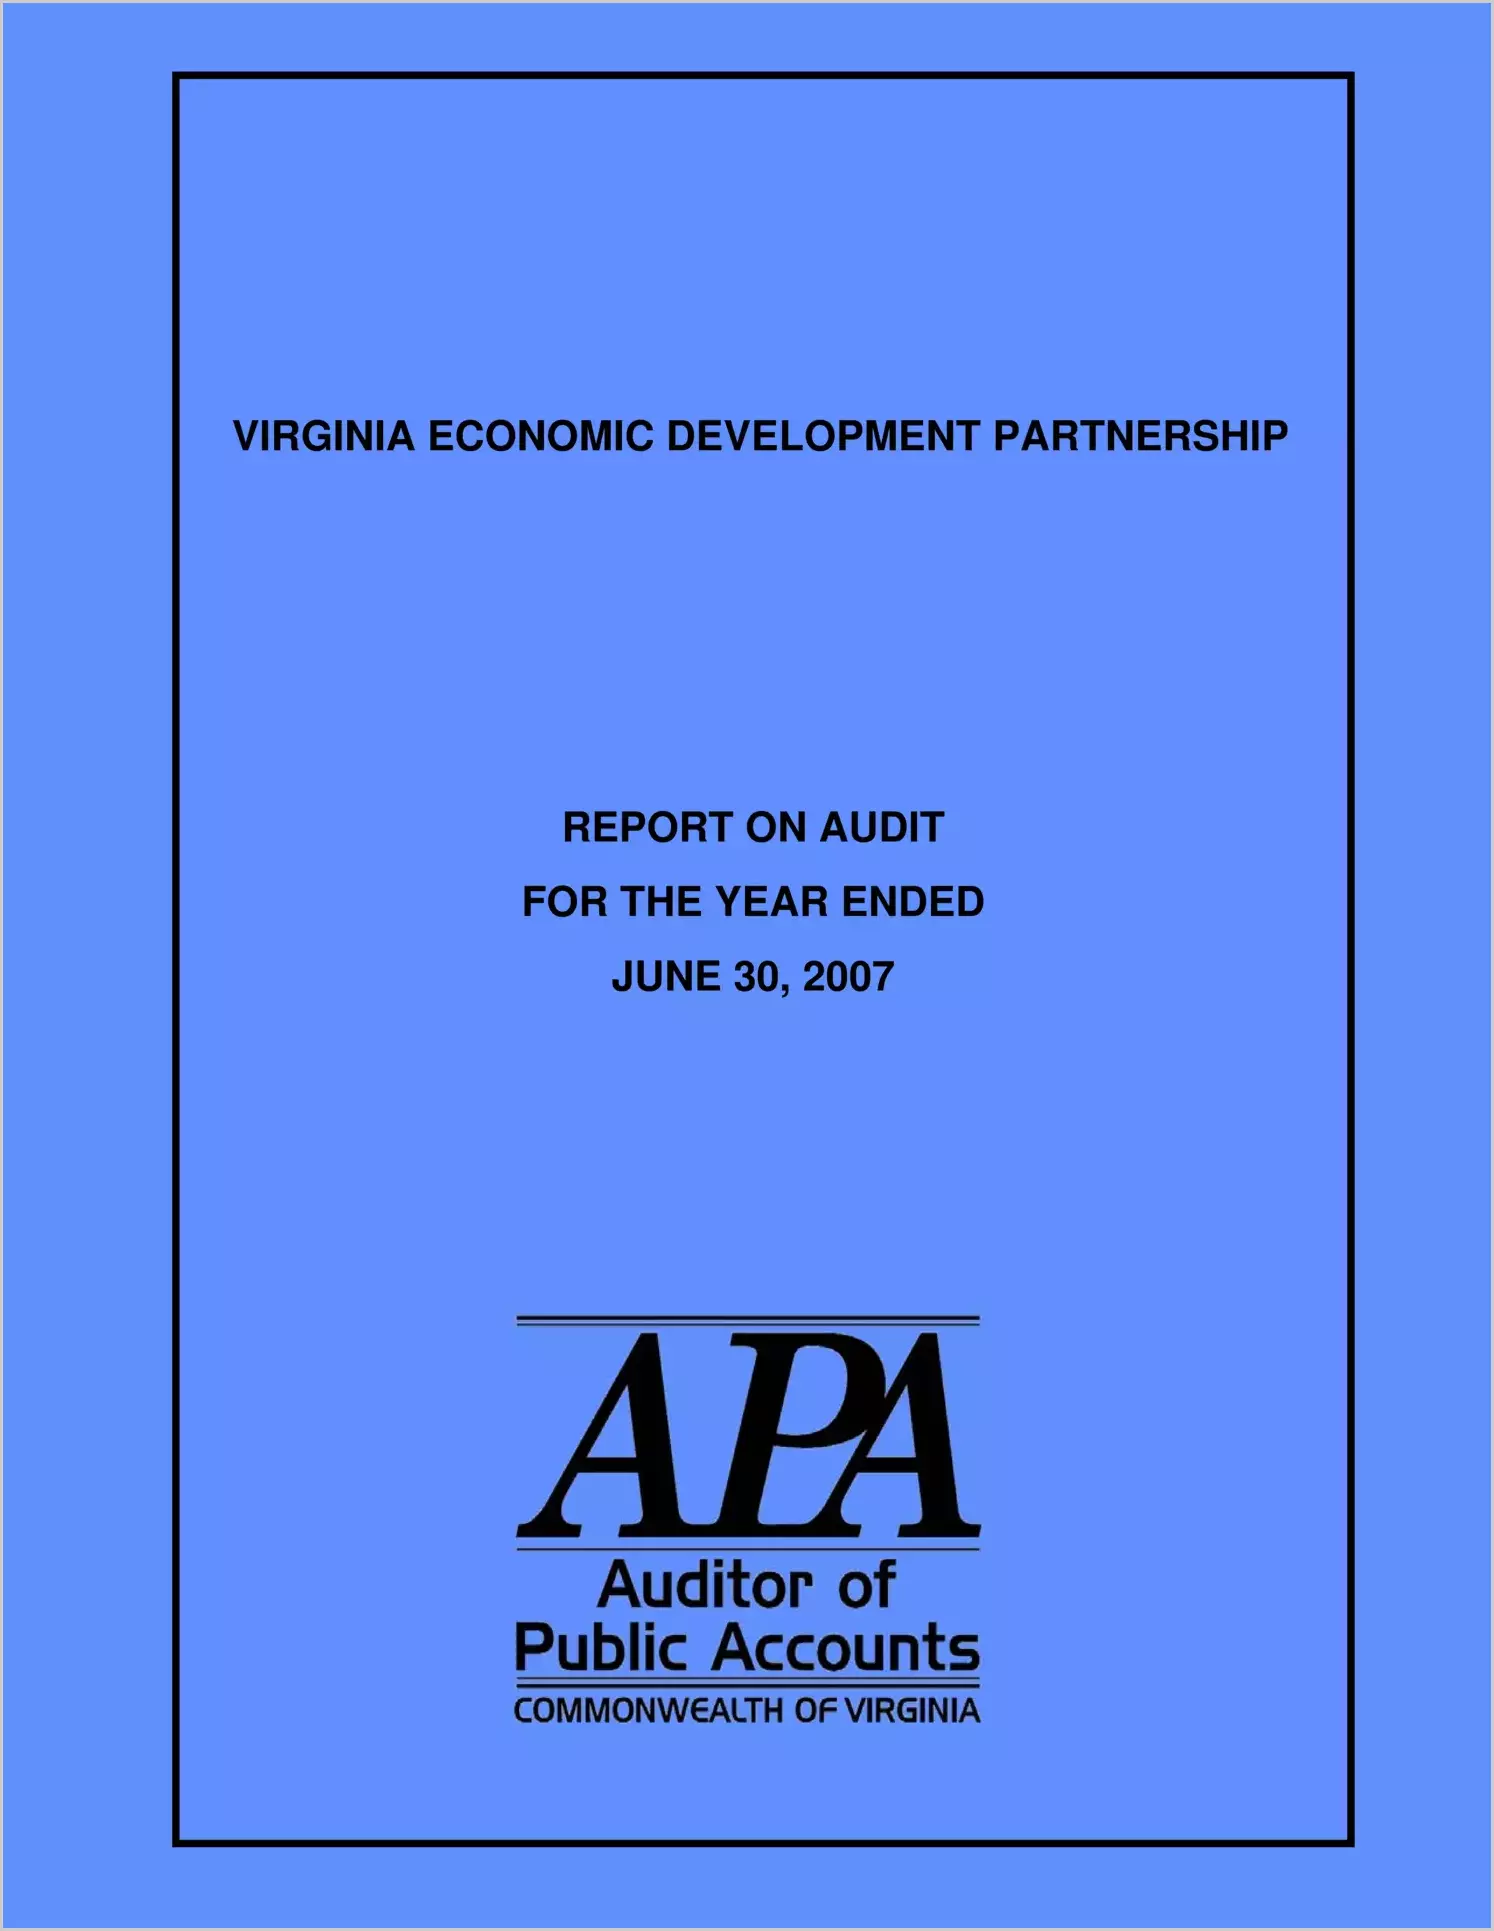 Virginia Economic Development Partnership for the year ended June 30, 2007